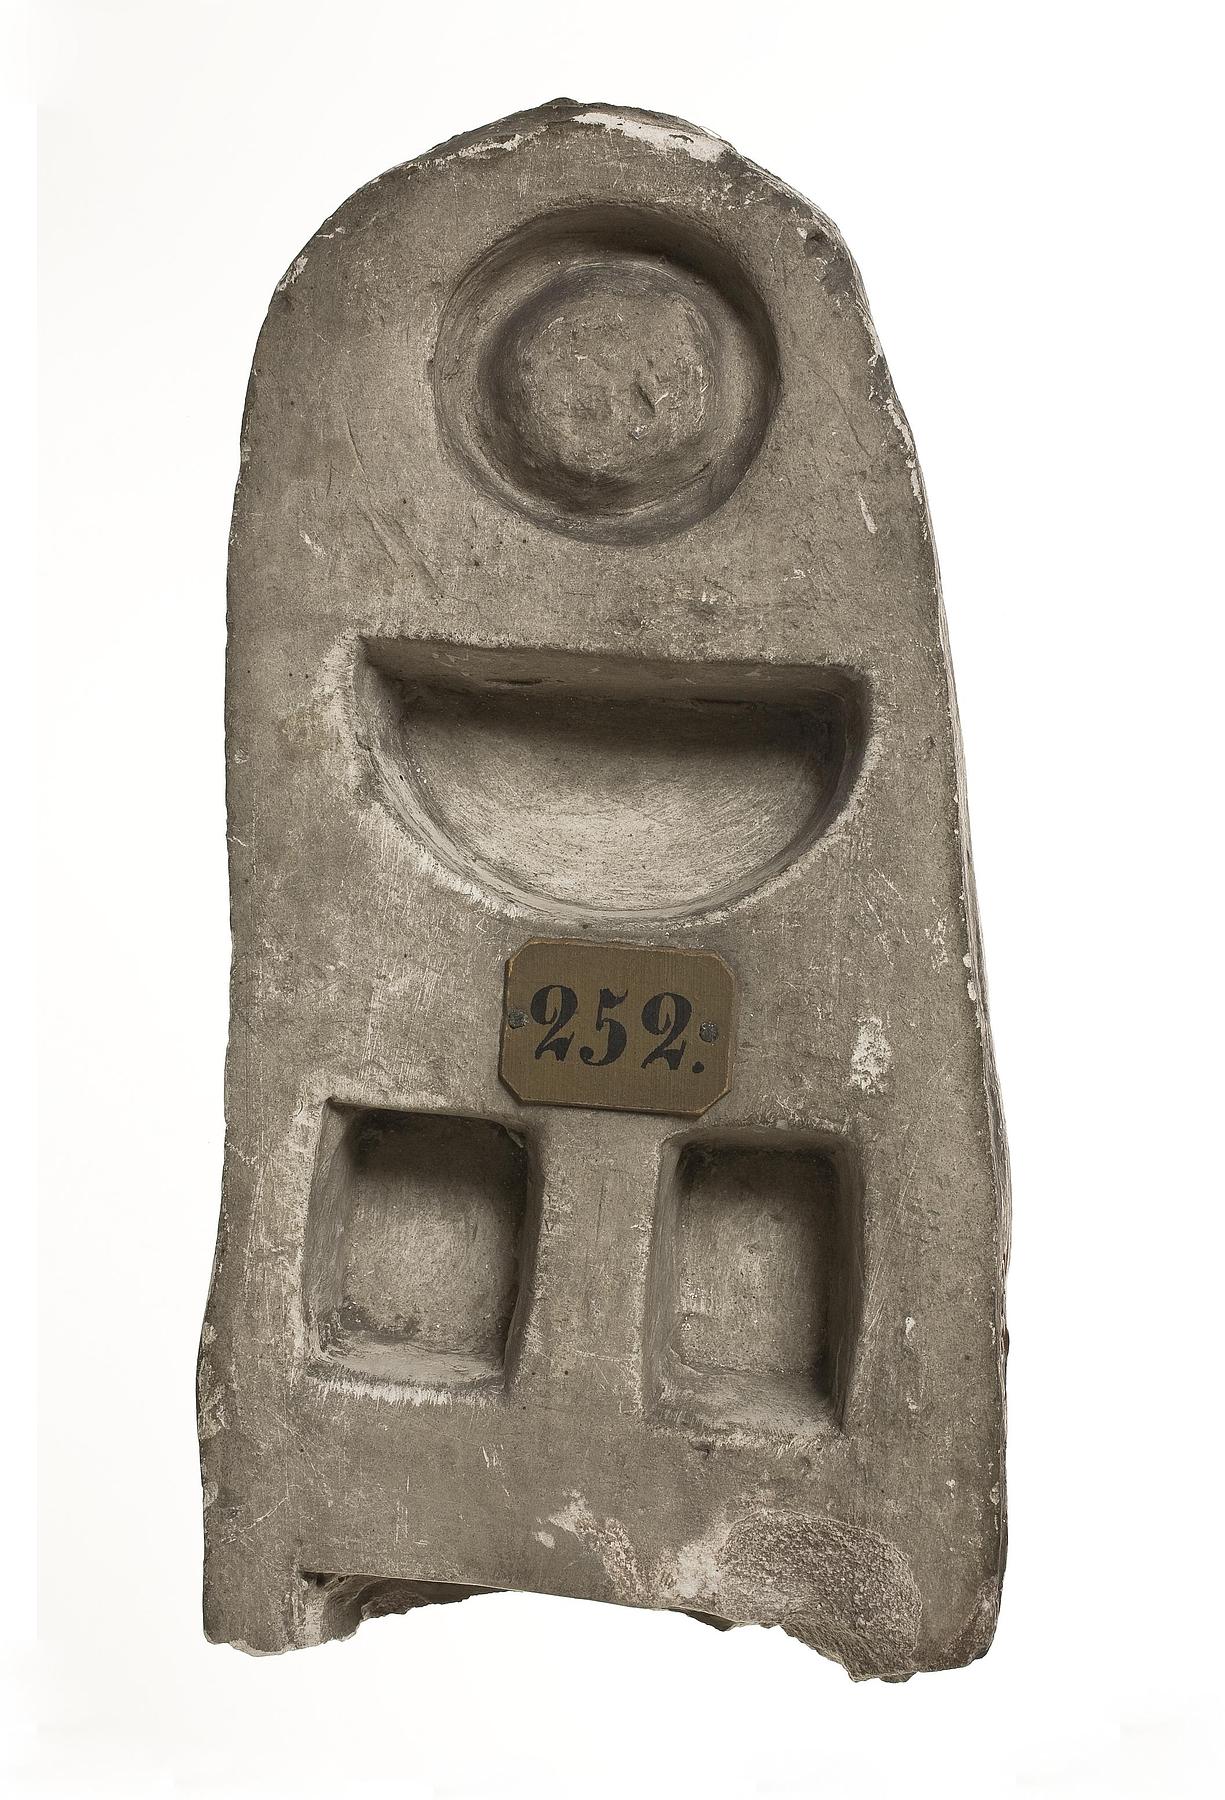 Hieroglyfindskrift, L252